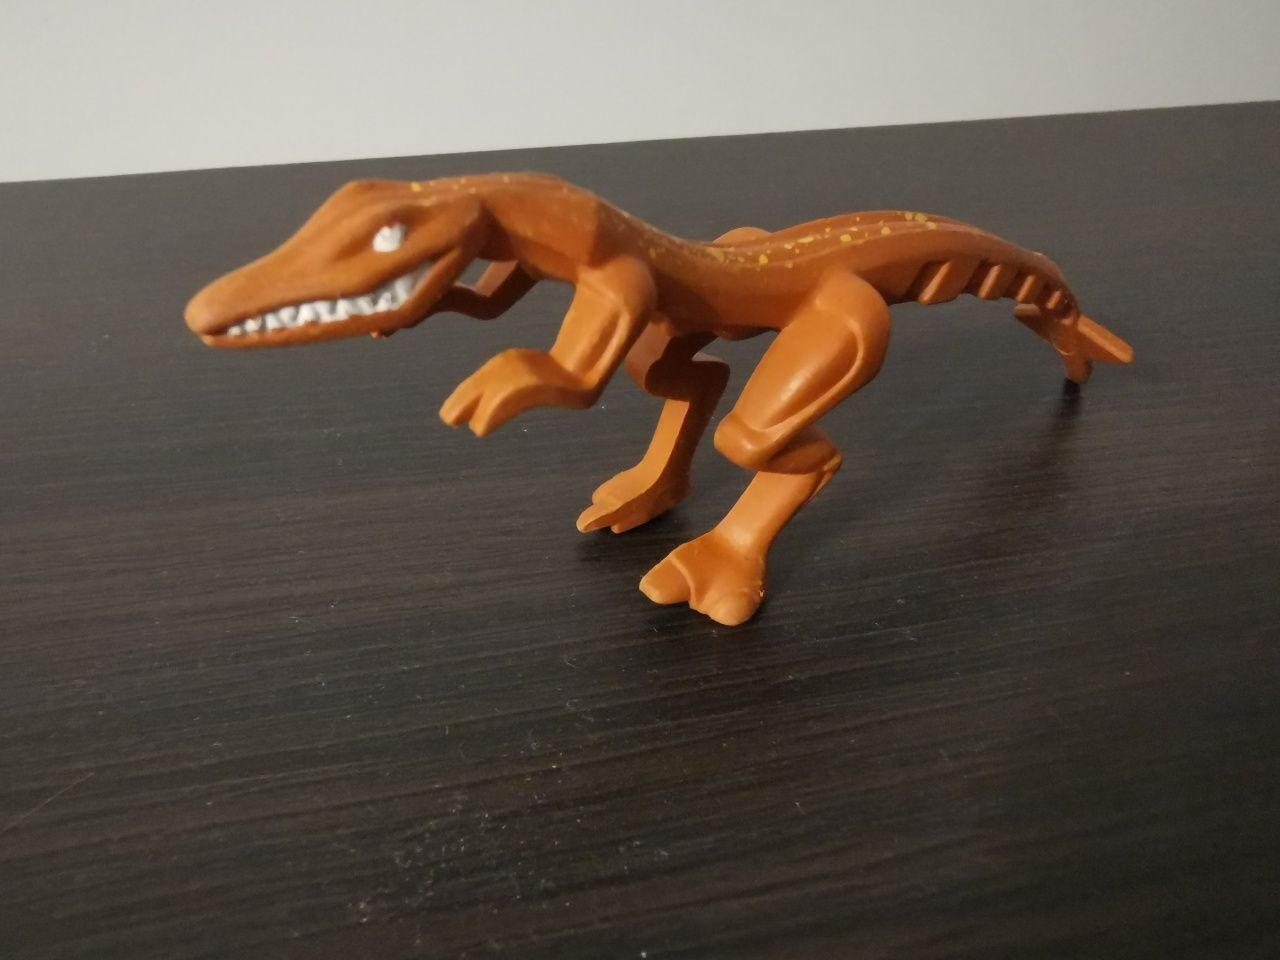 621g3. LEGO dinozaur Mutant Lizard jaszczurka